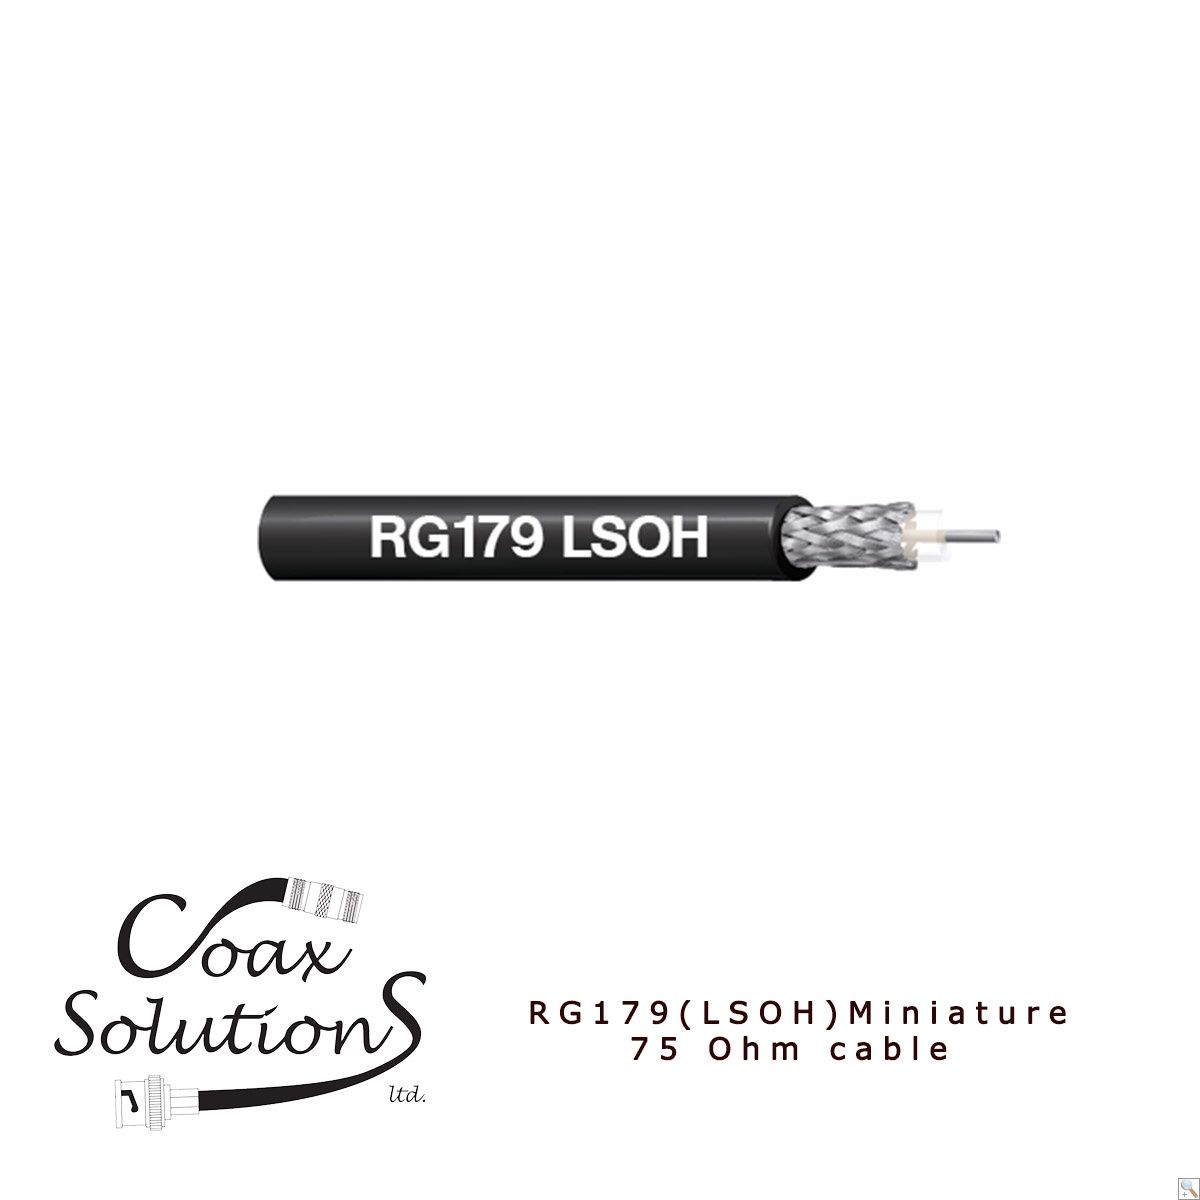 RG179 (LSOH) - Cut lengths